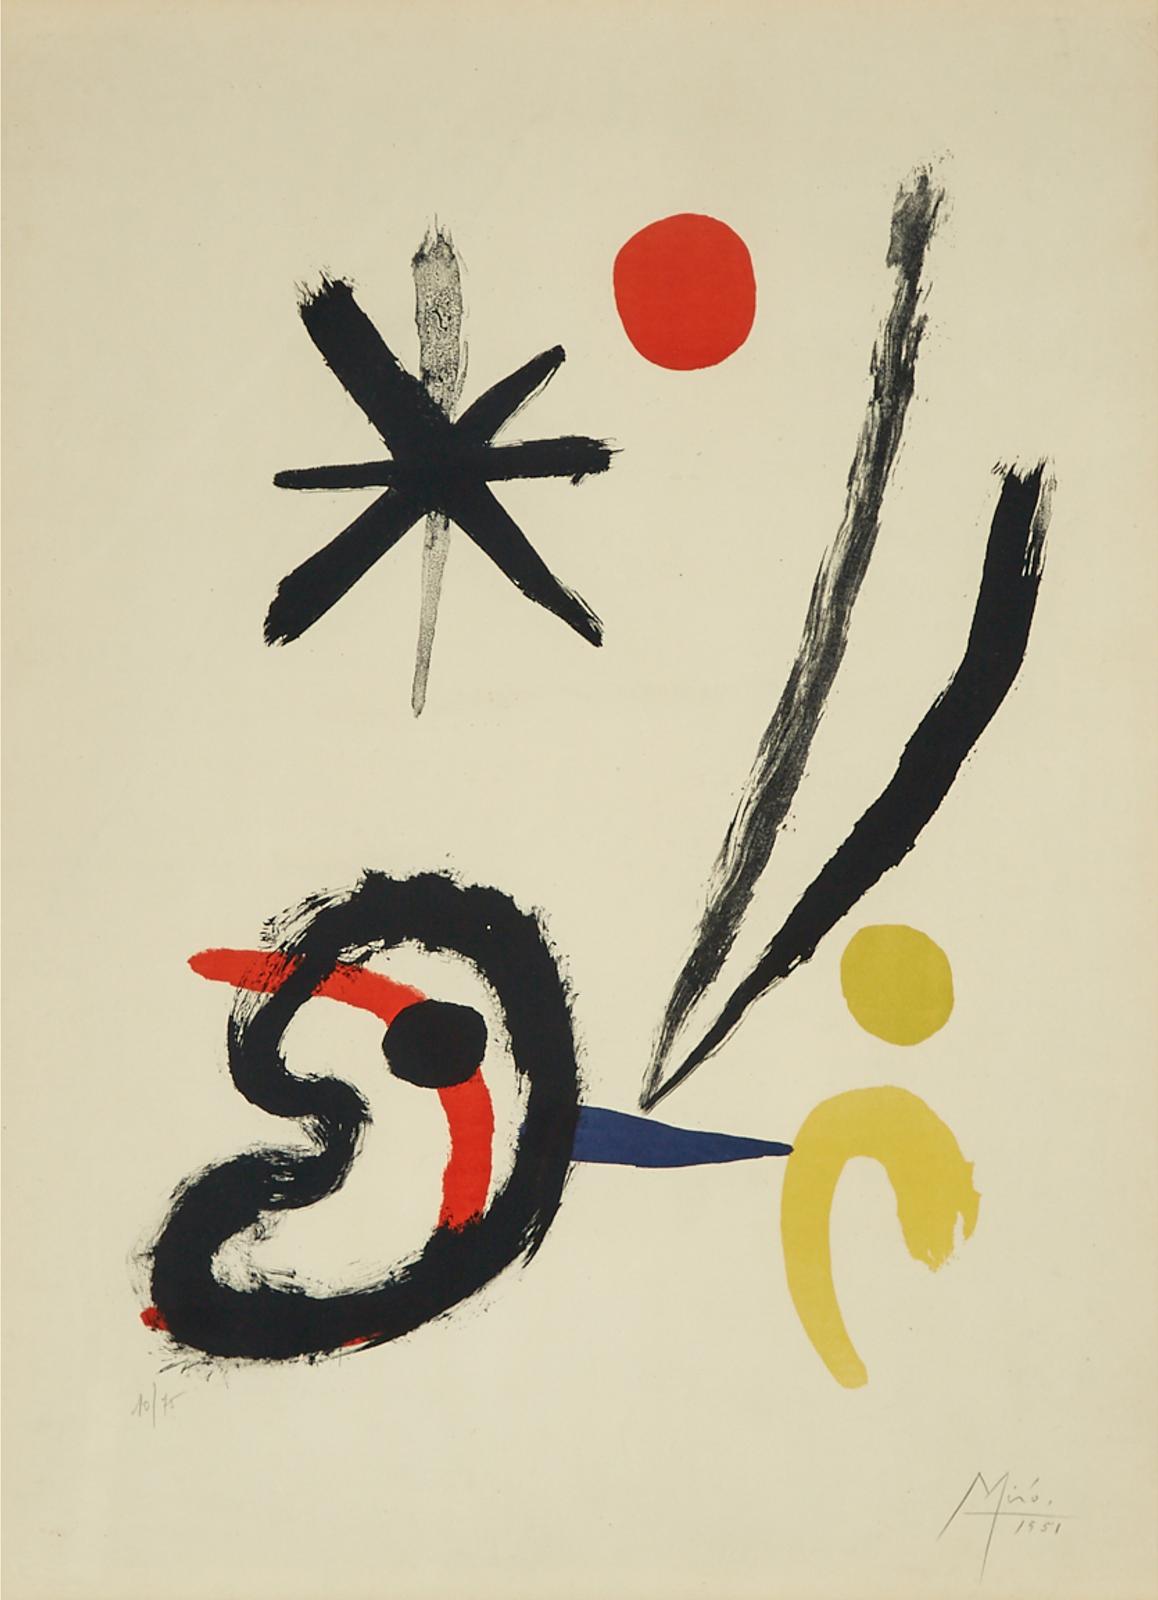 Joan Miró (1893-1983) - L'oiseau Comete (Comet Bird), 1951 [mourlot, 178]